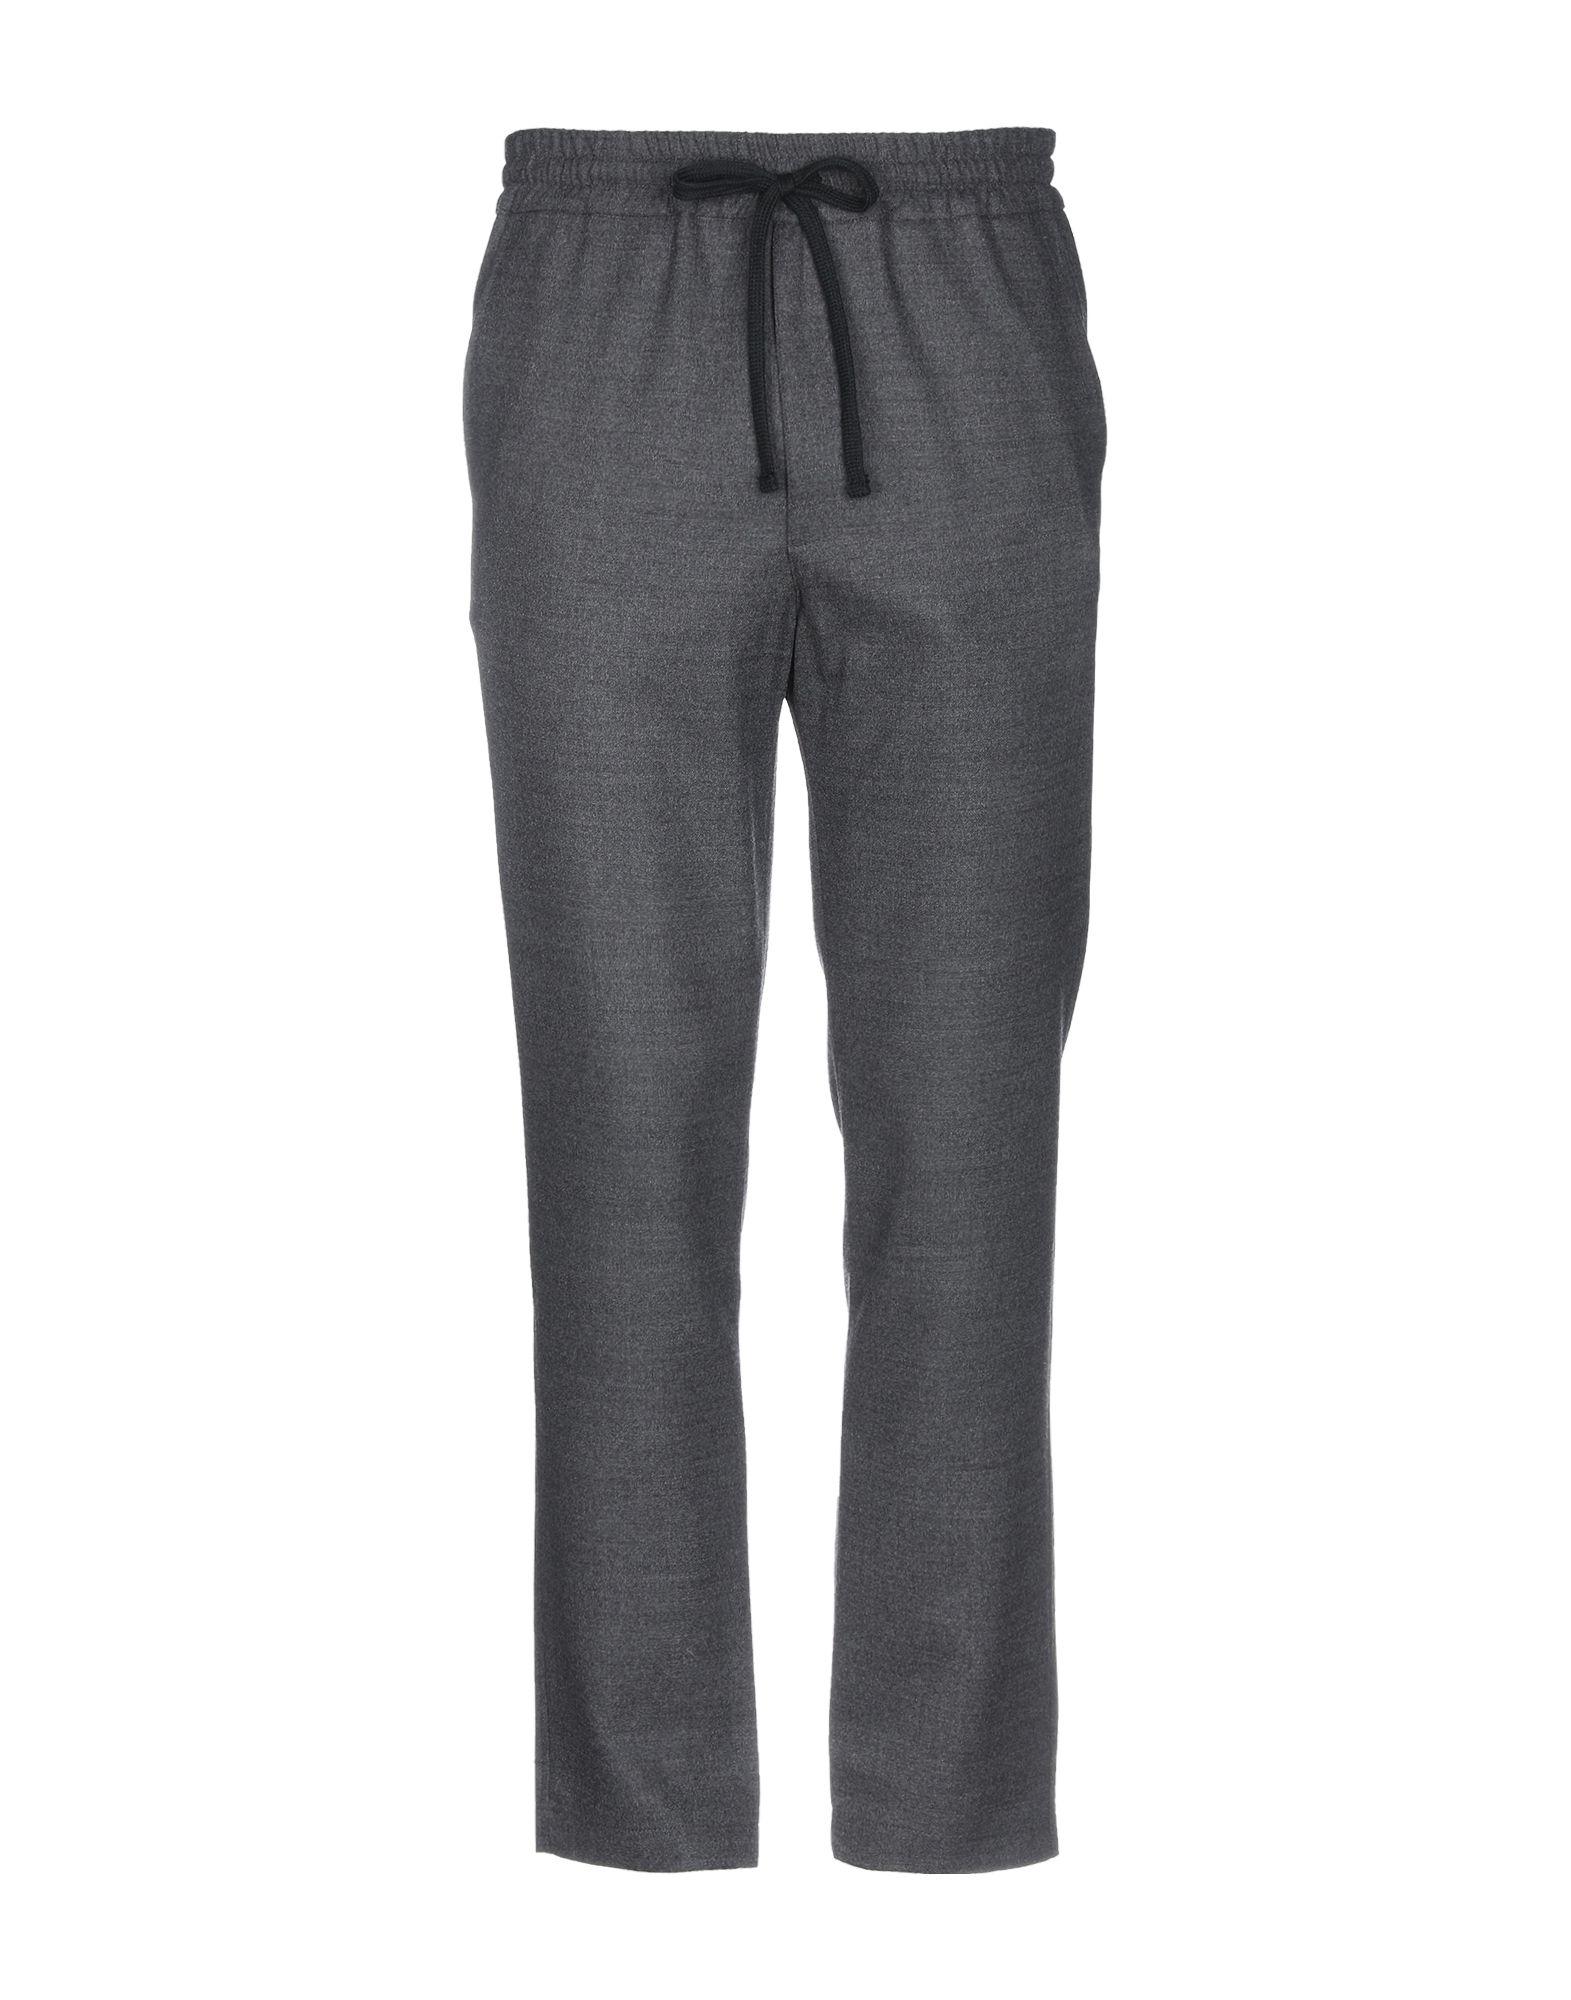 Barena Wool Casual Pants in Steel Grey (Gray) for Men - Lyst